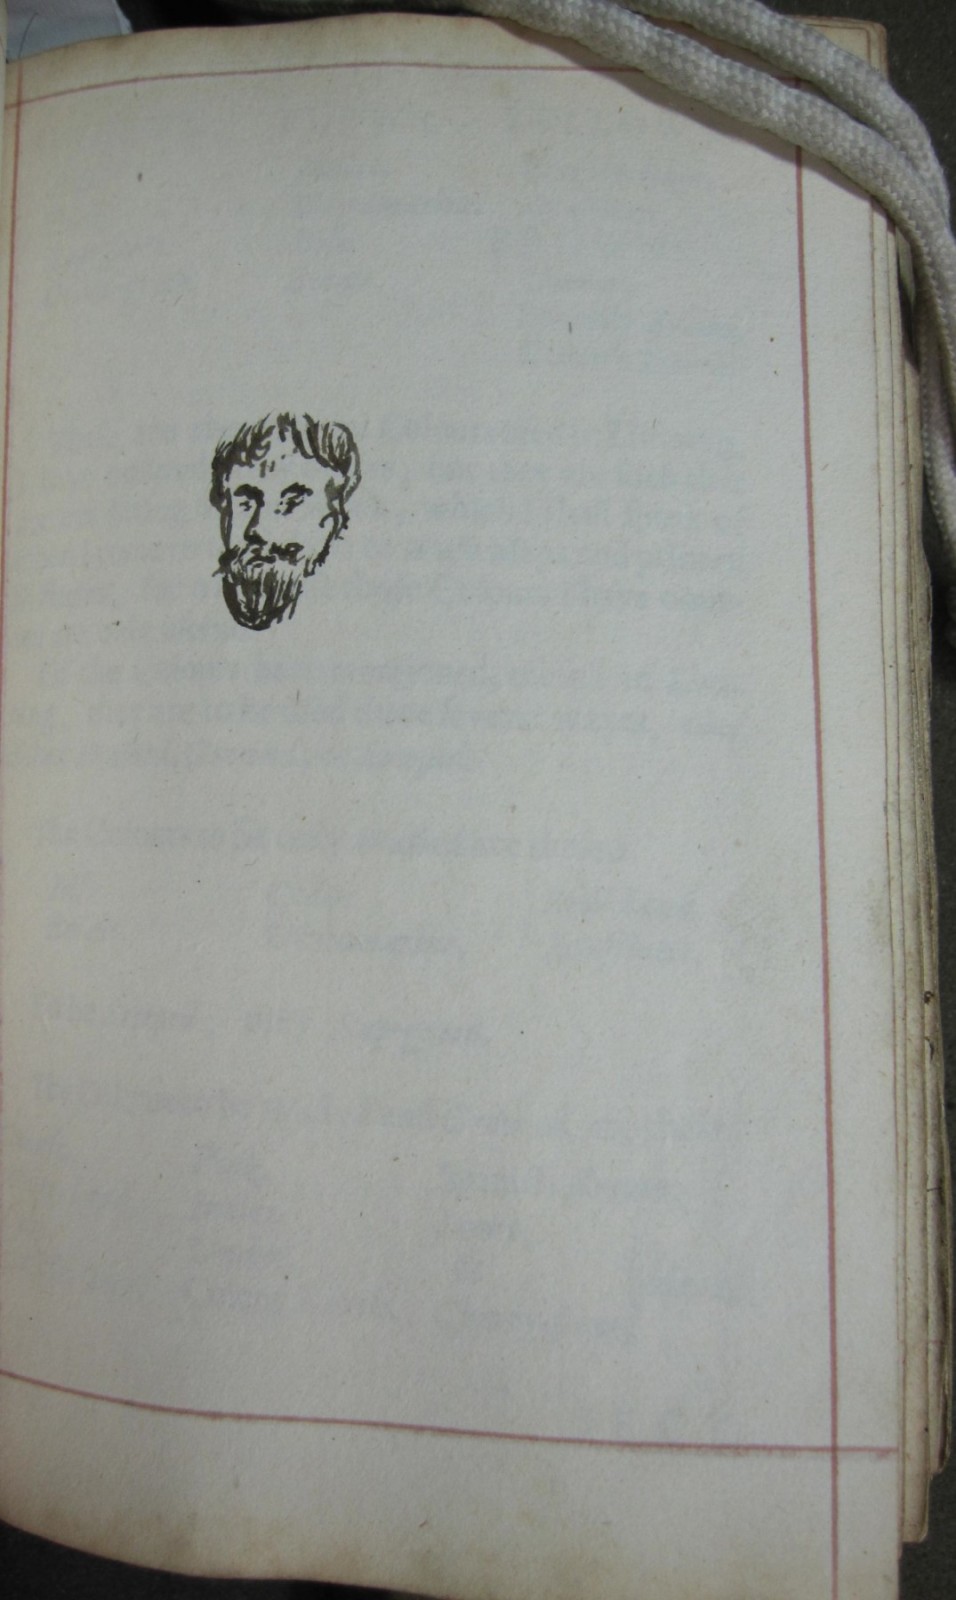 Illustration of a head